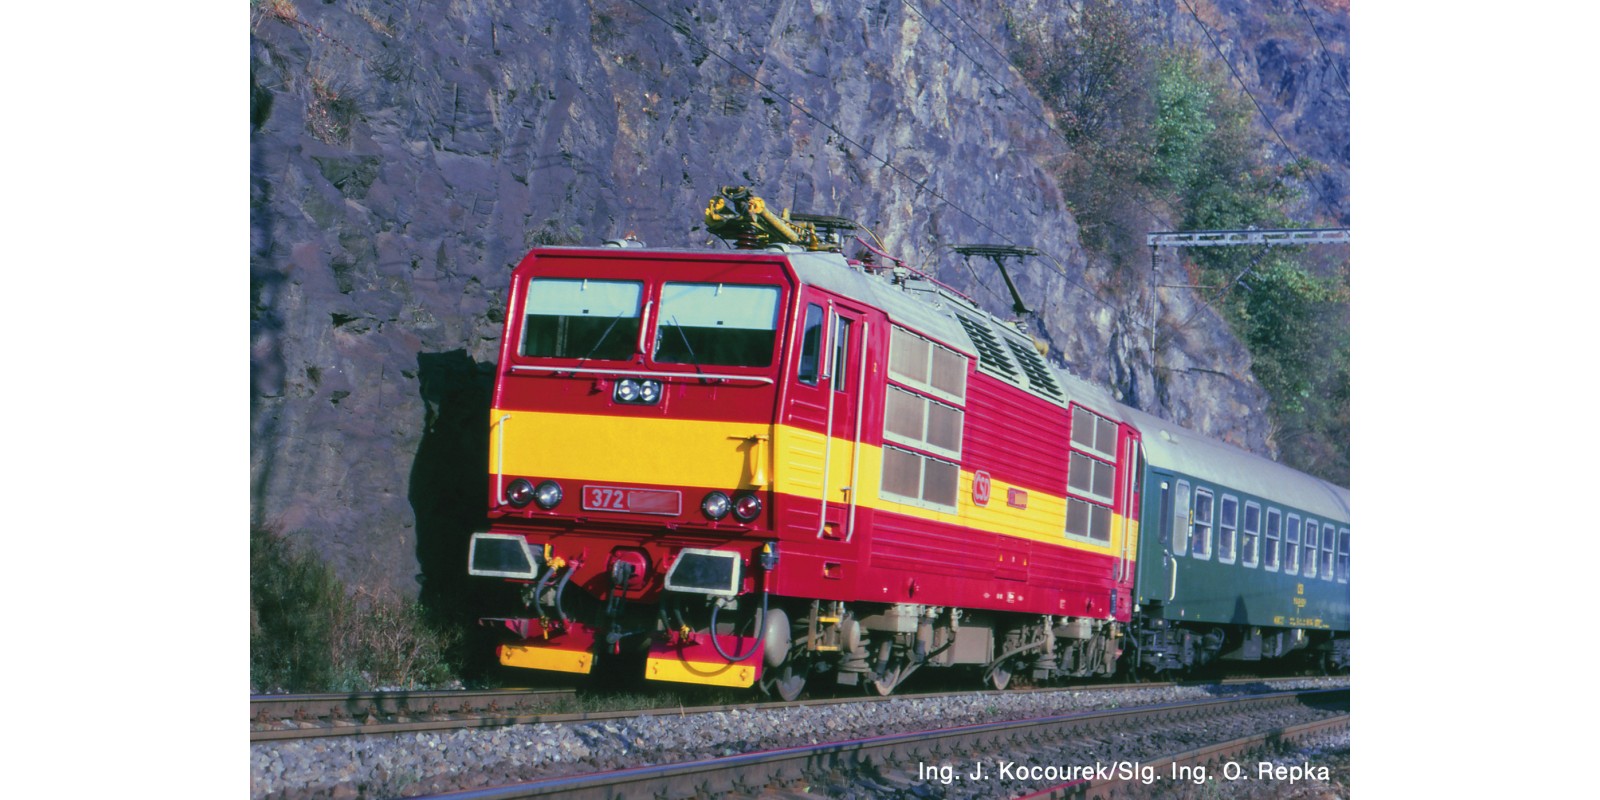 RO71222 Electric locomotive class 372